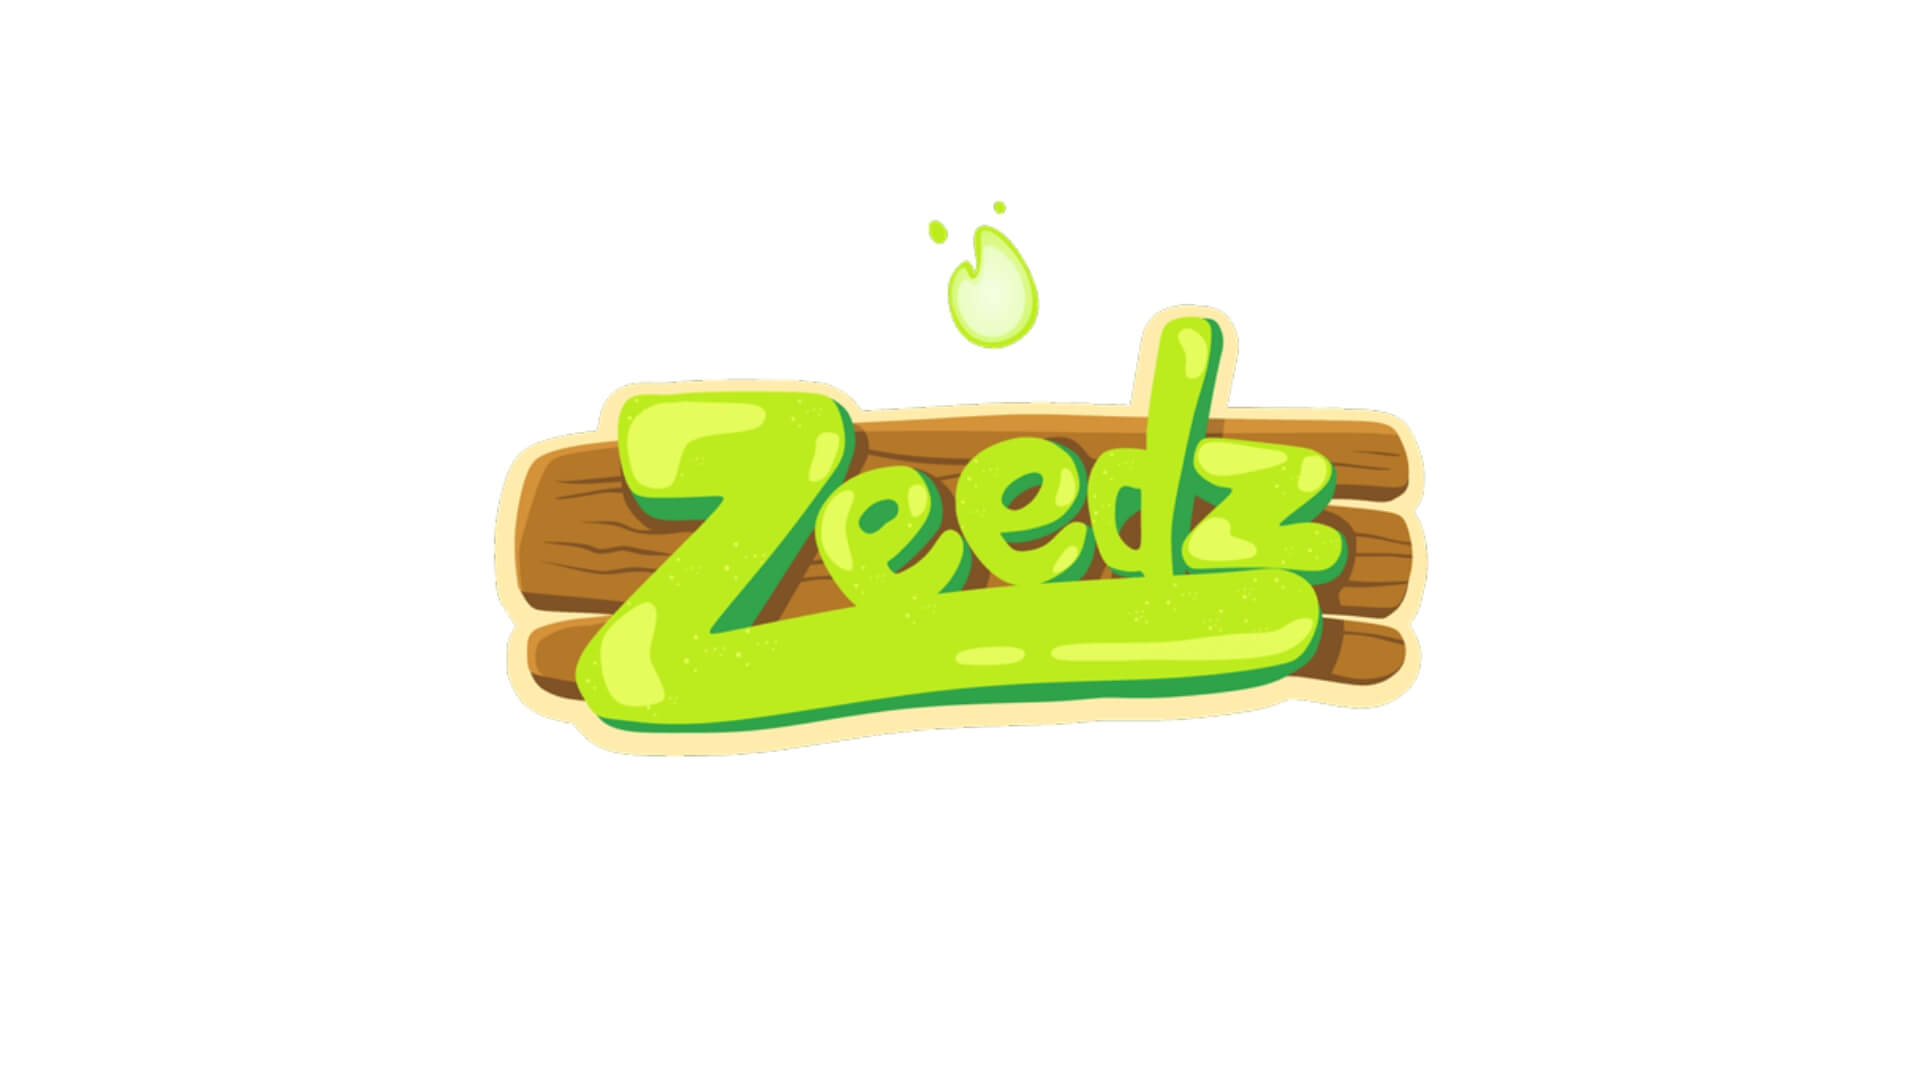 Zeedz.ioが100万ドルを調達し、モバイルデバイス向けの気候変動ゲームをローンチ